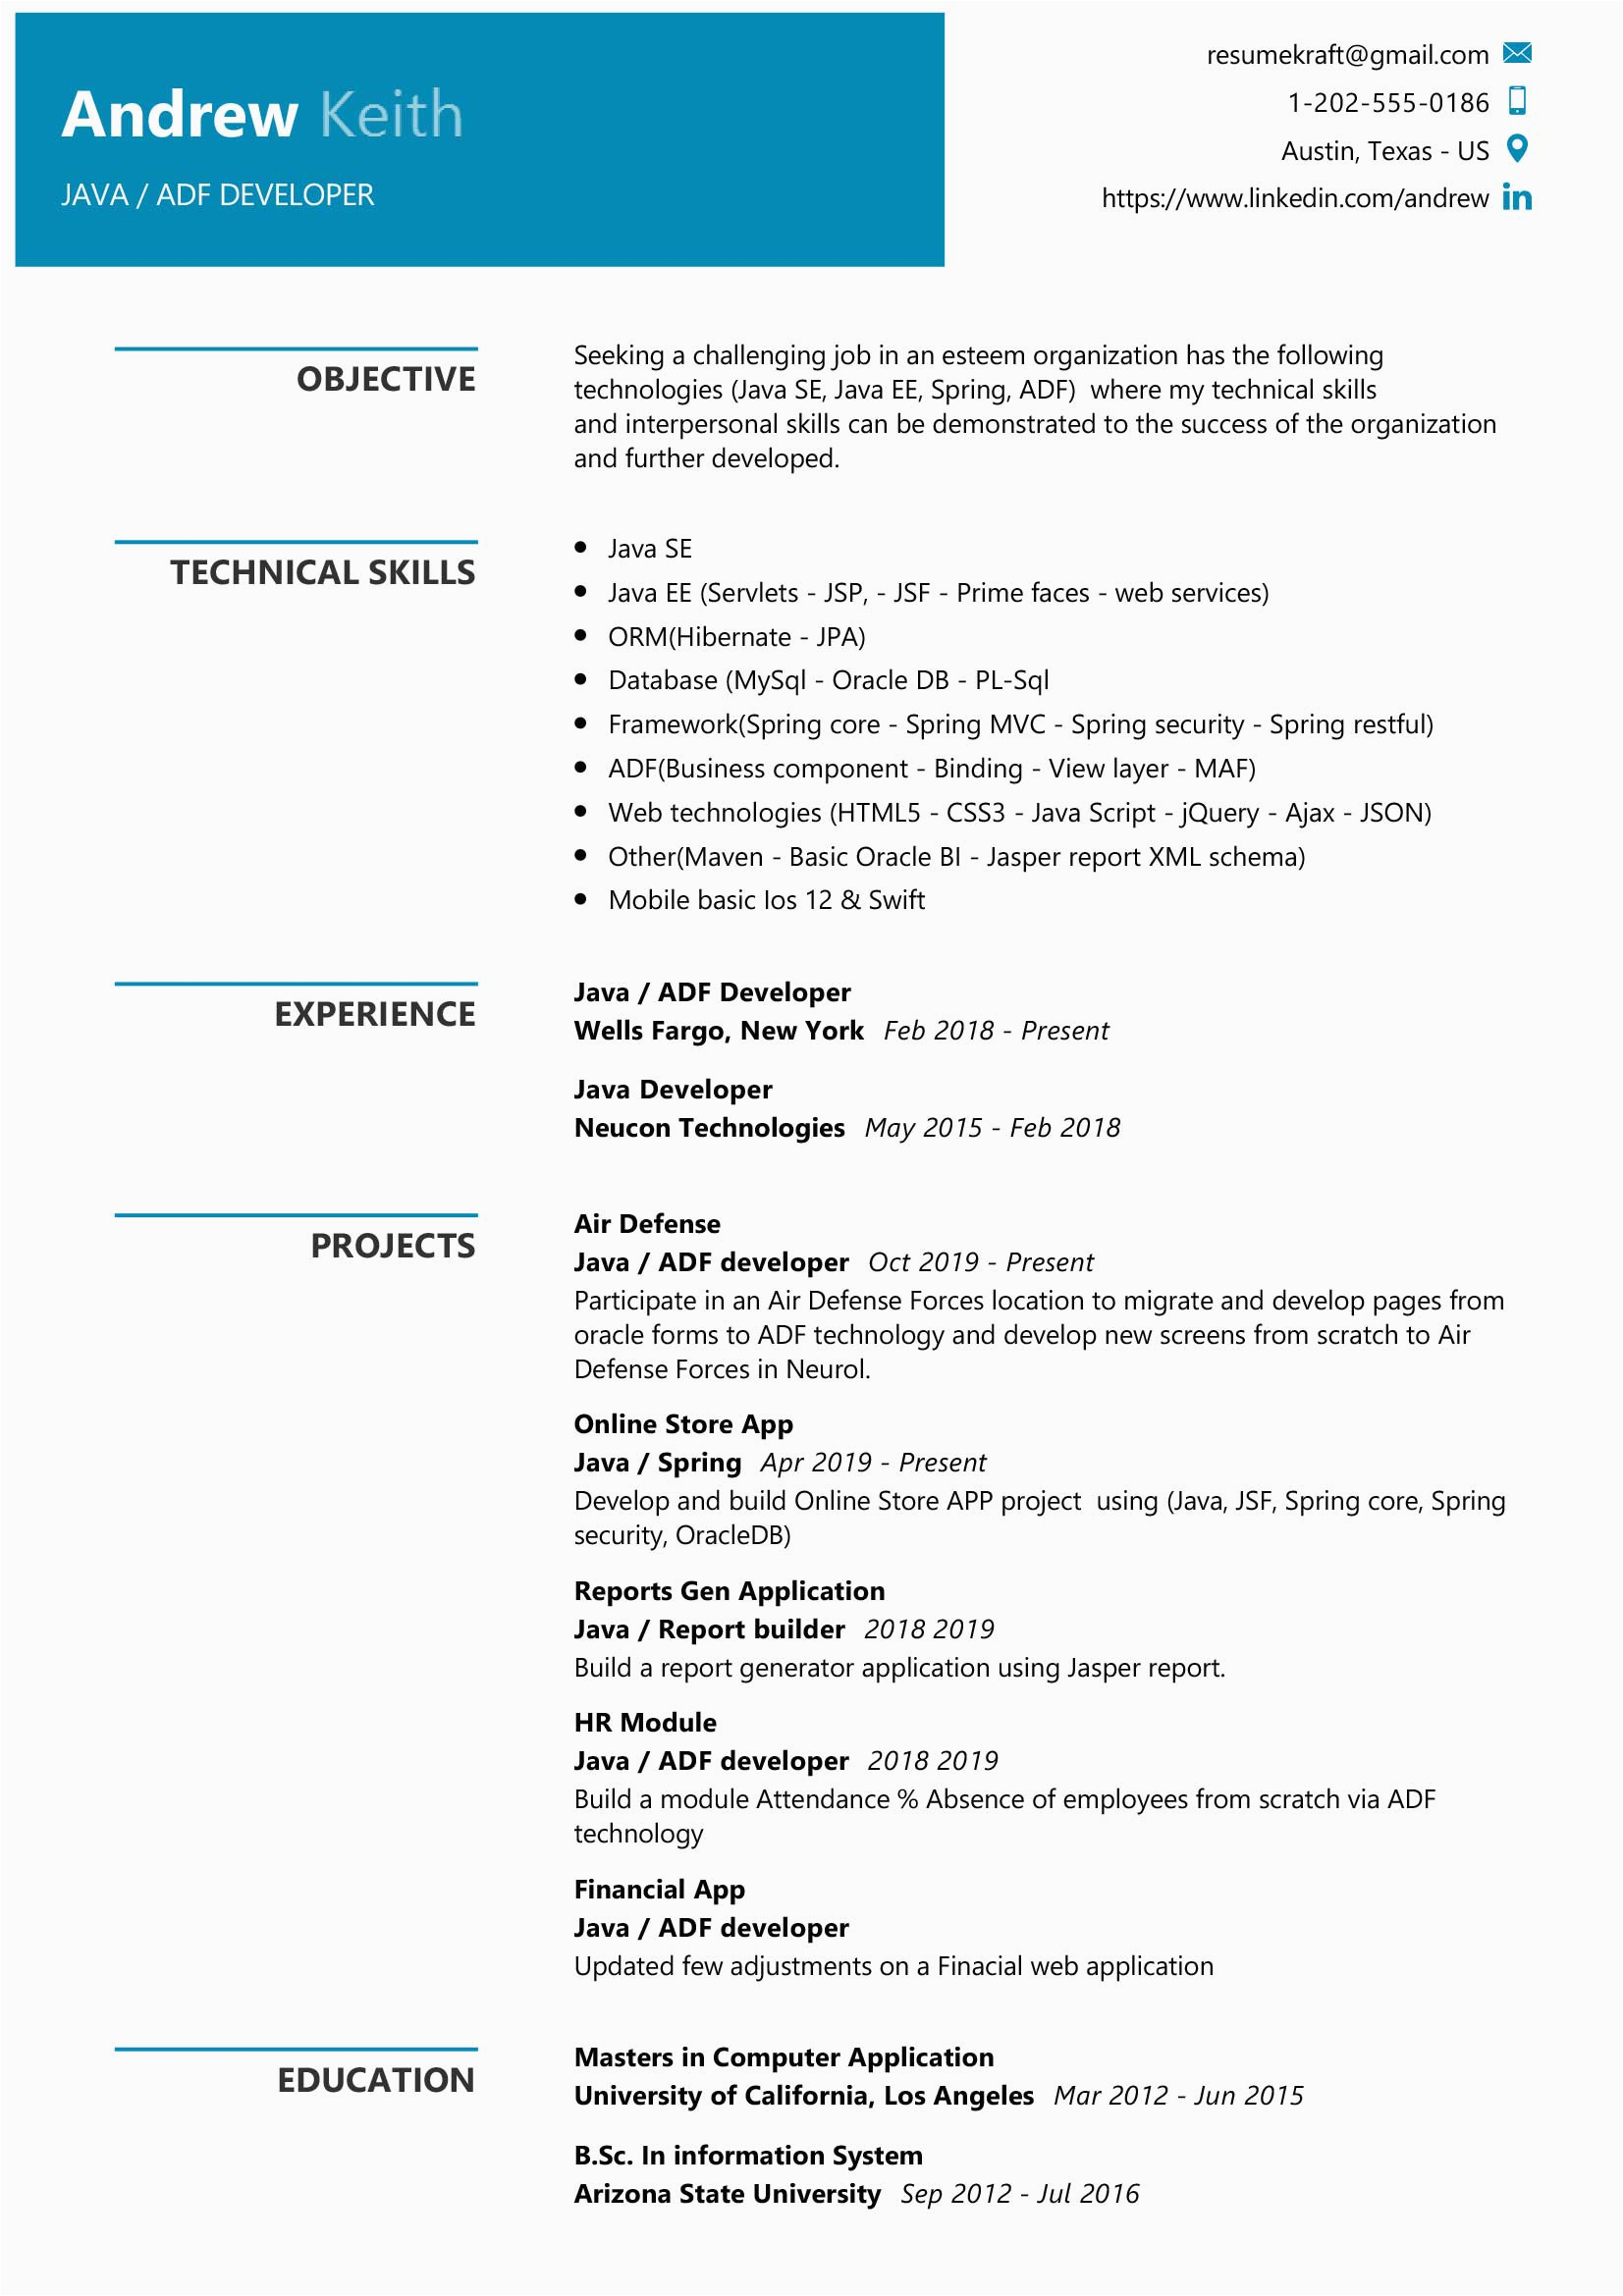 Sample Professional Resume Objective for Java Developer Java Developer Resume Sample & Writing Tips 2020 Resumekraft